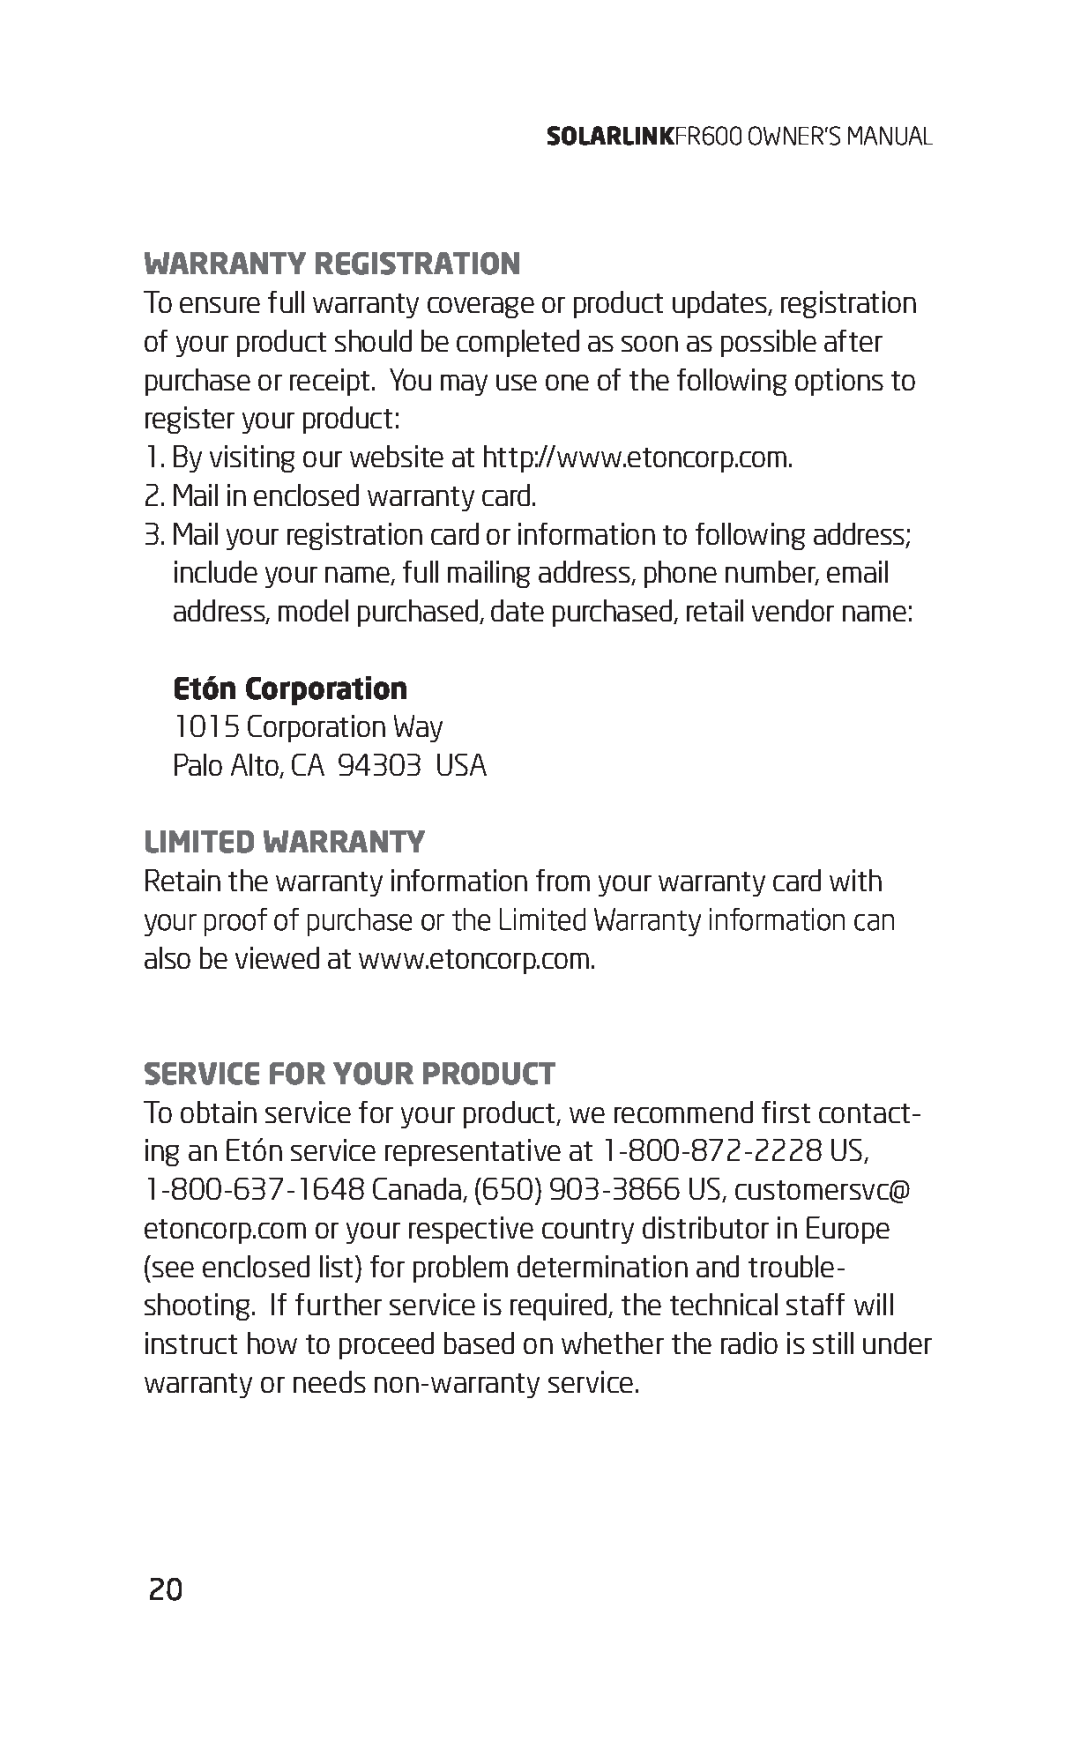 Eton FR600 owner manual Warranty Registration, Etón Corporation, Limited Warranty, Service For Your Product 